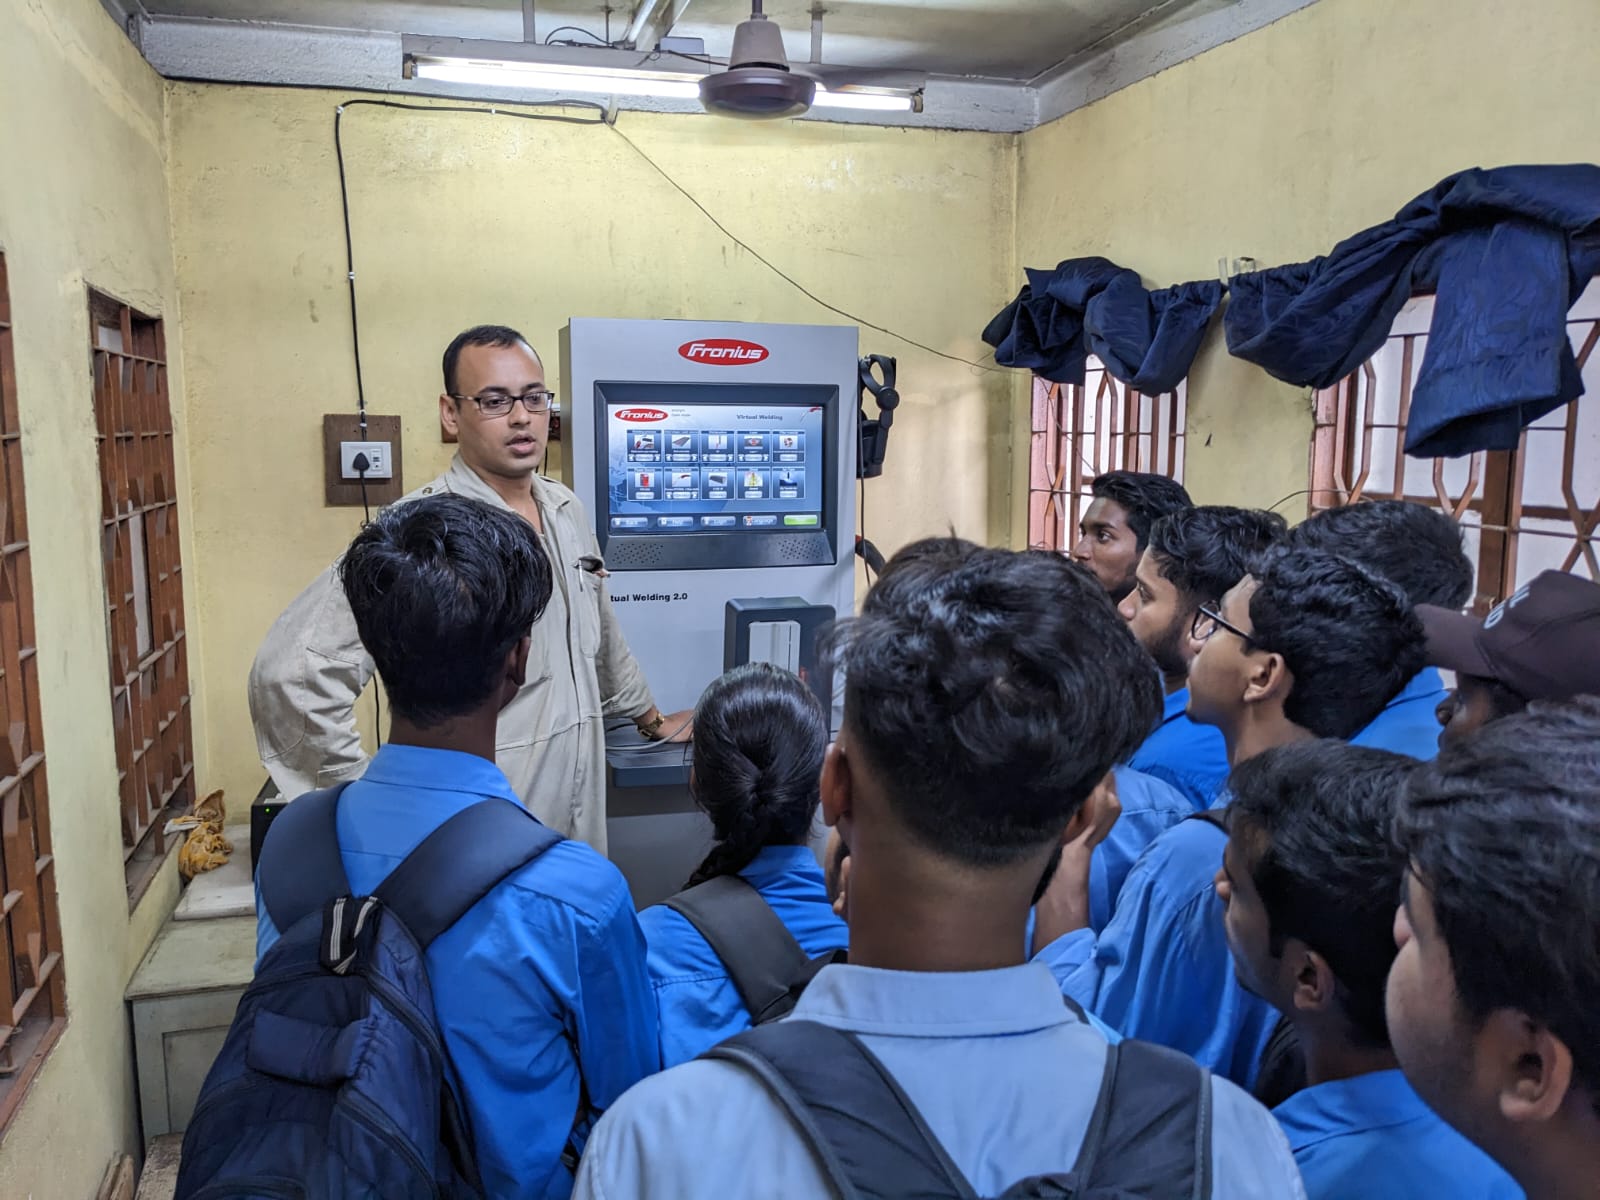 Image 1 - Industrial Visit - Visit of trainees from Tollygunje Govt. ITI, Kolkata on 29 Mar 23